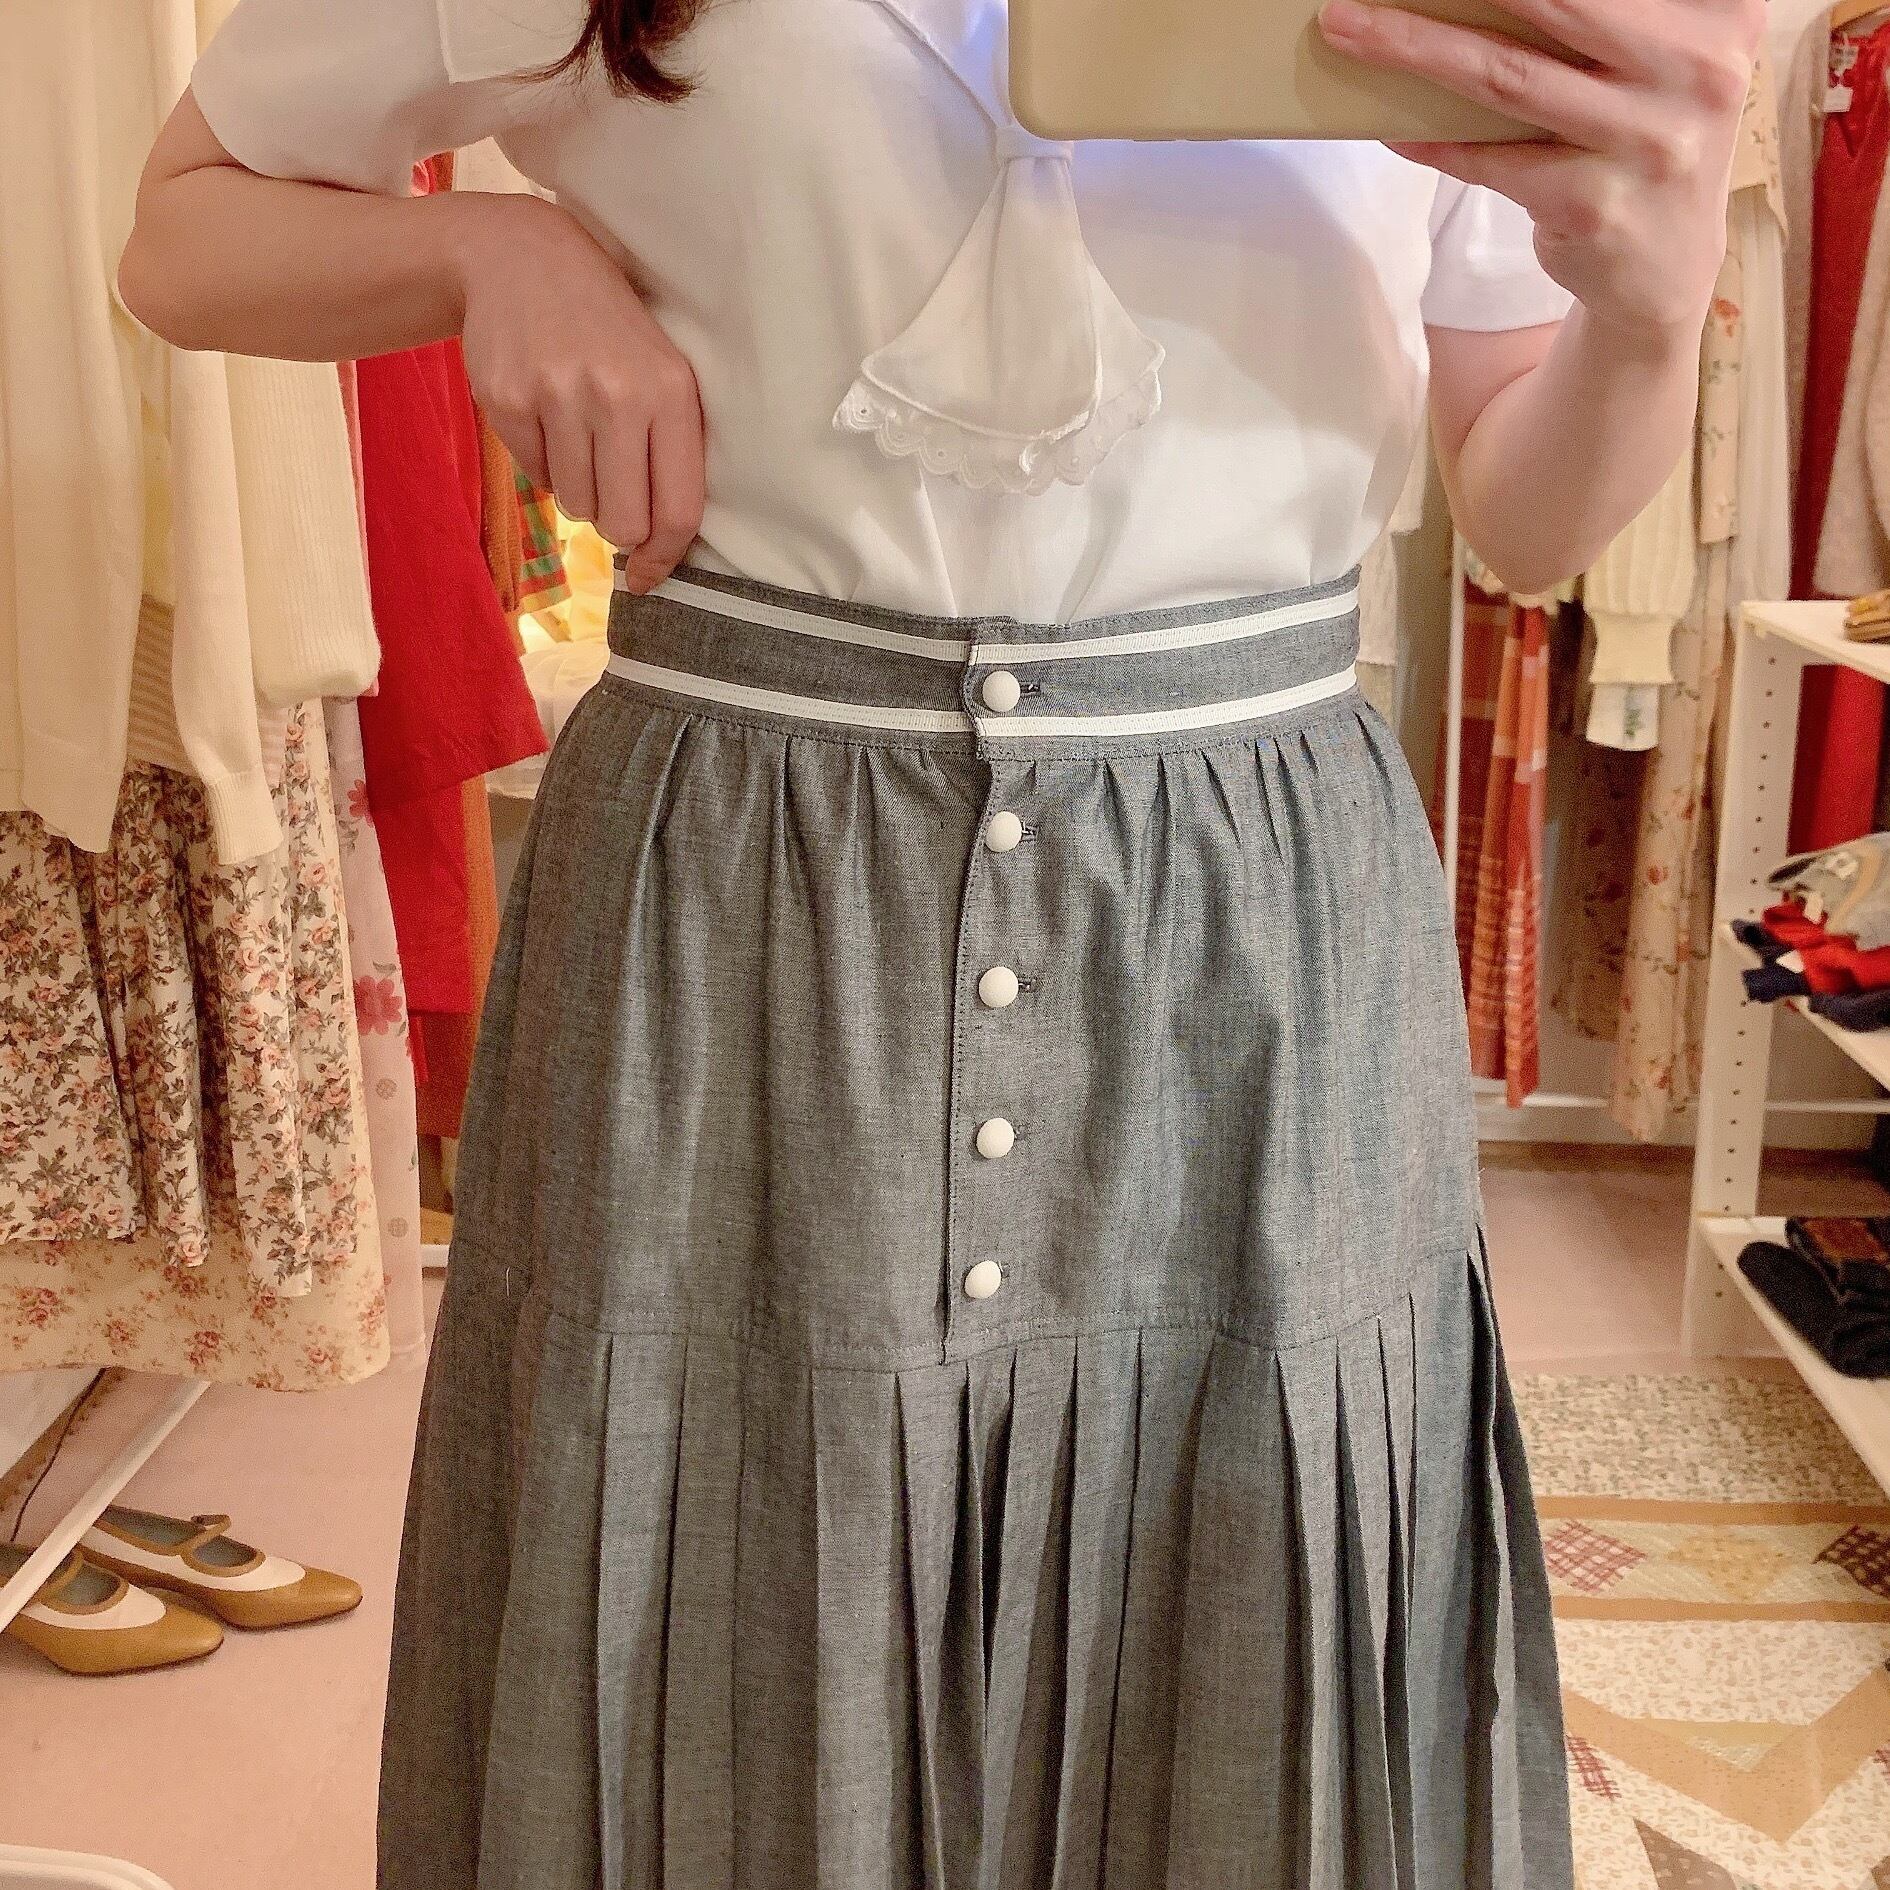 original / brand new pleats skirt / gray